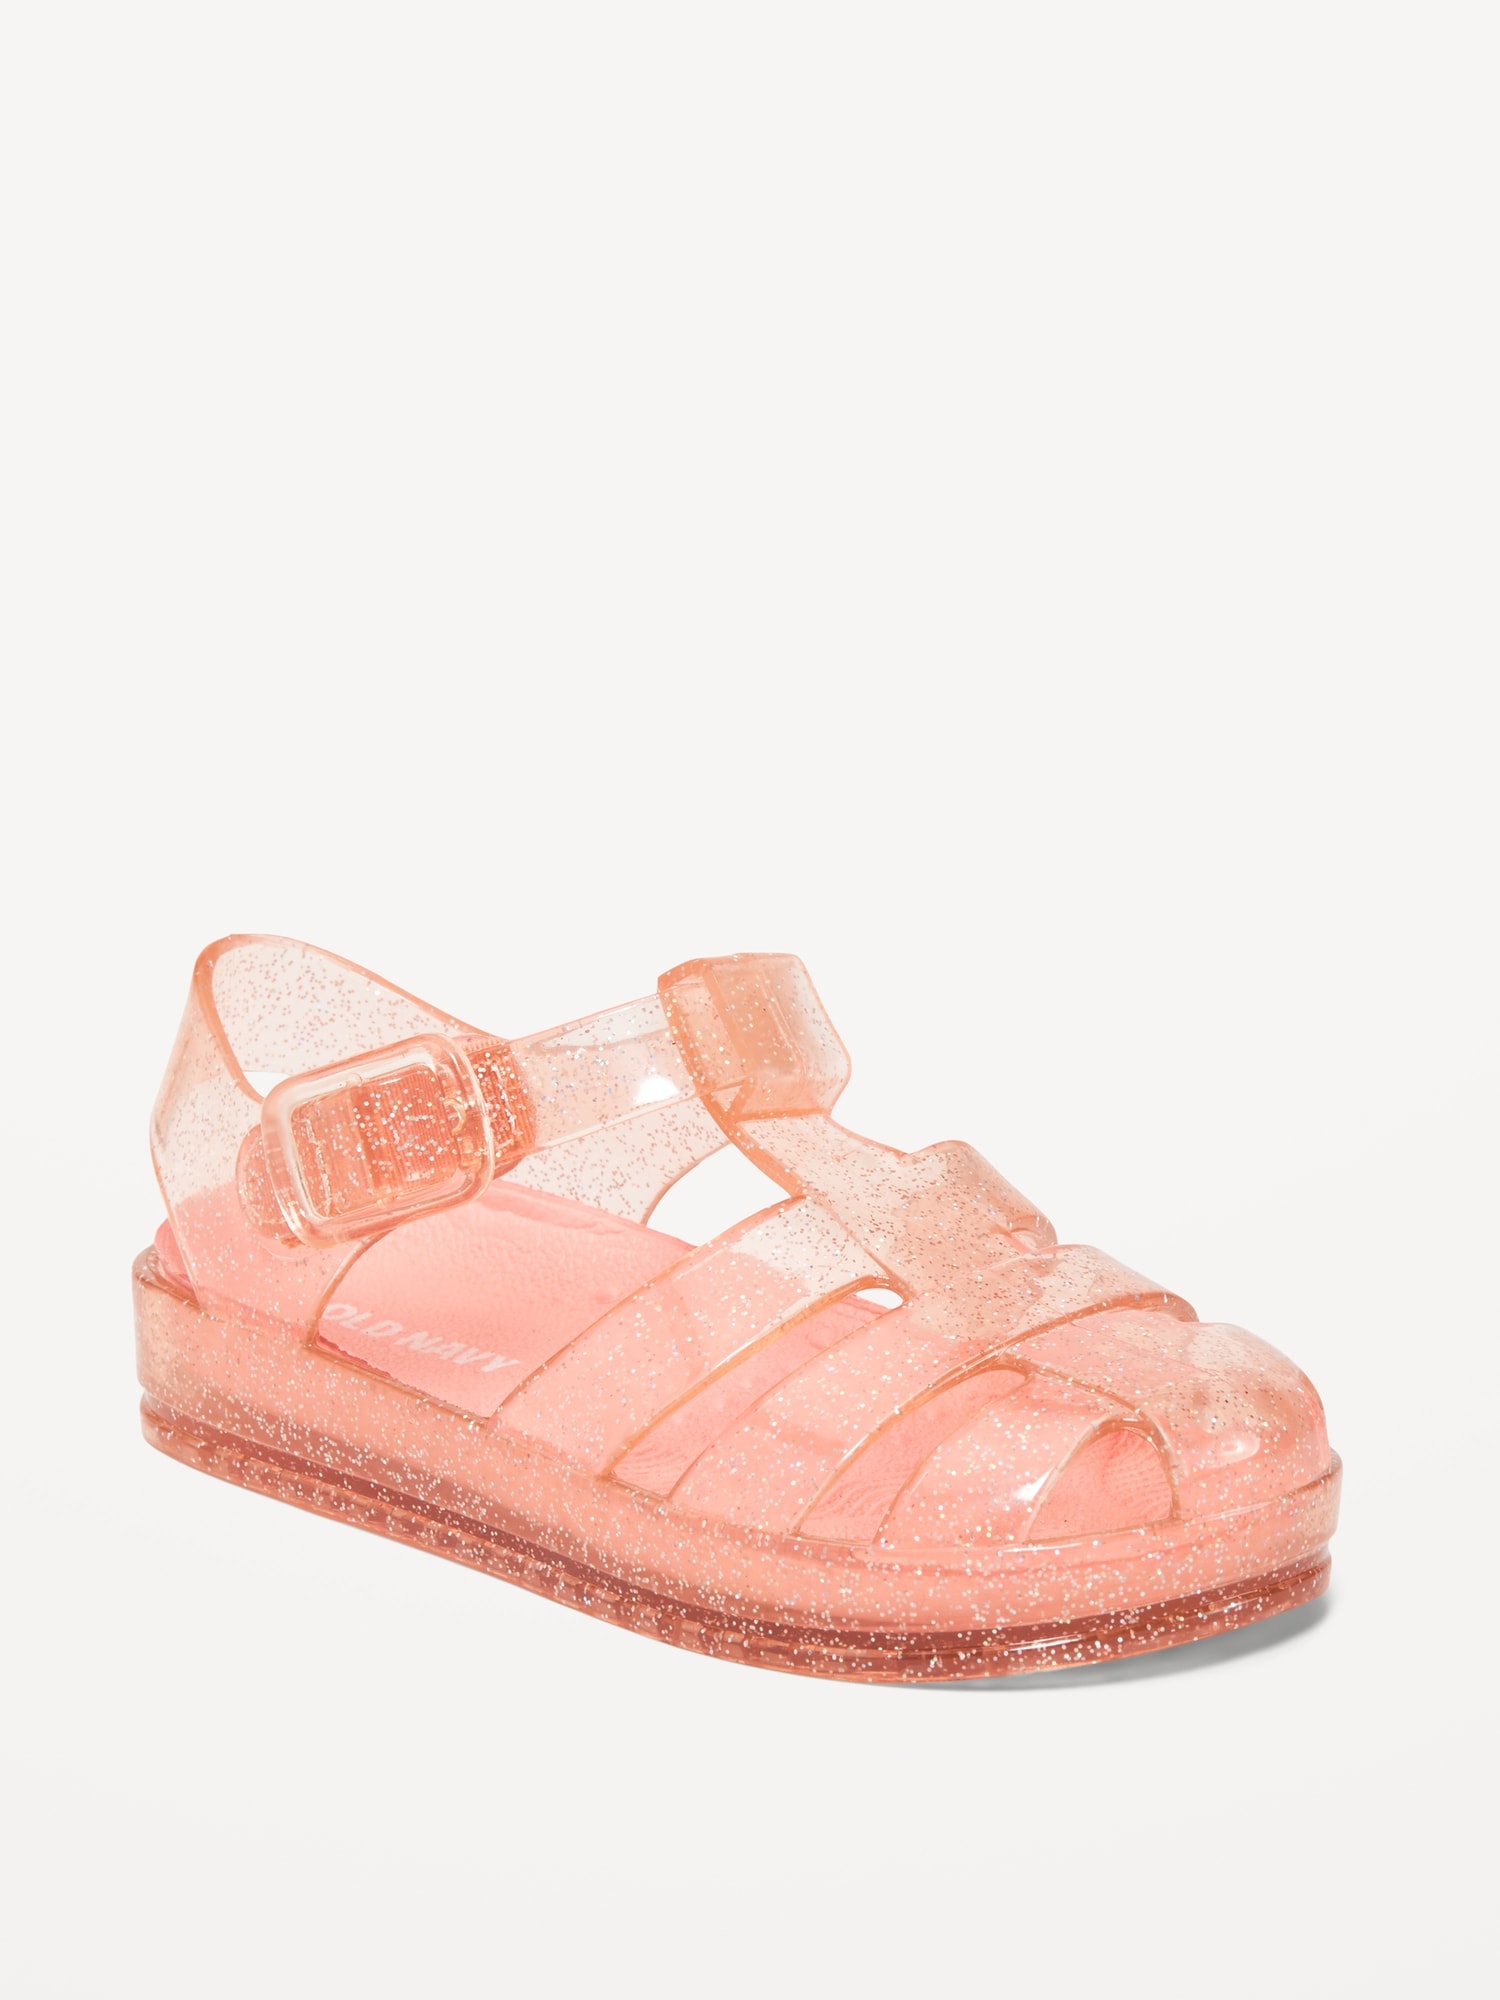 Old Navy Shiny-Jelly Fisherman Sandals for Toddler Girls orange. 1